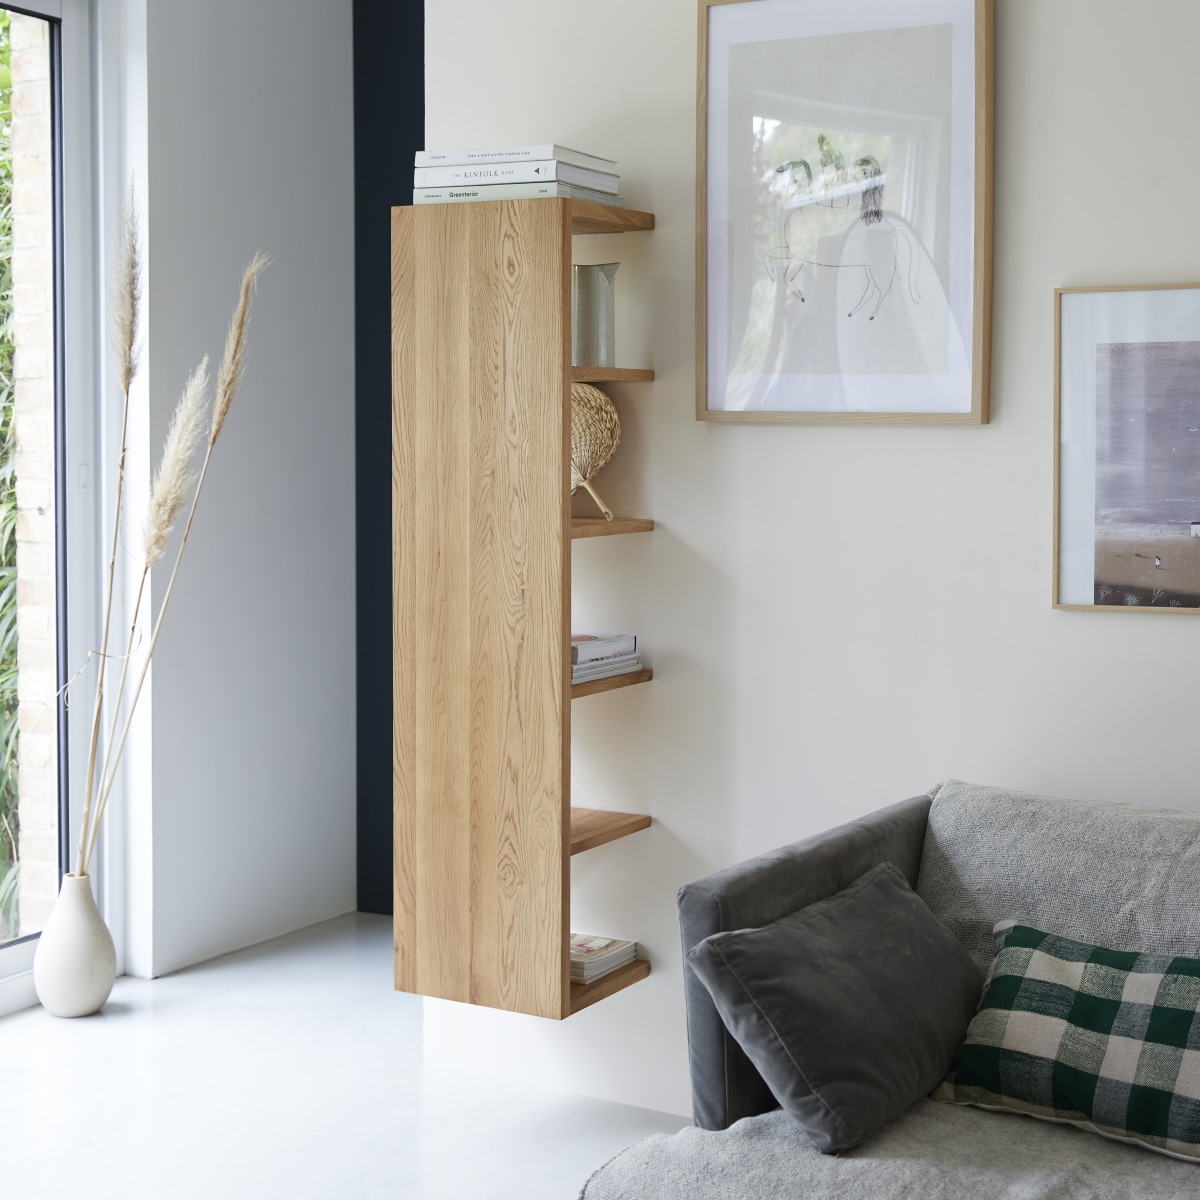 Easy - Solid oak wall-mounted Bookshelf